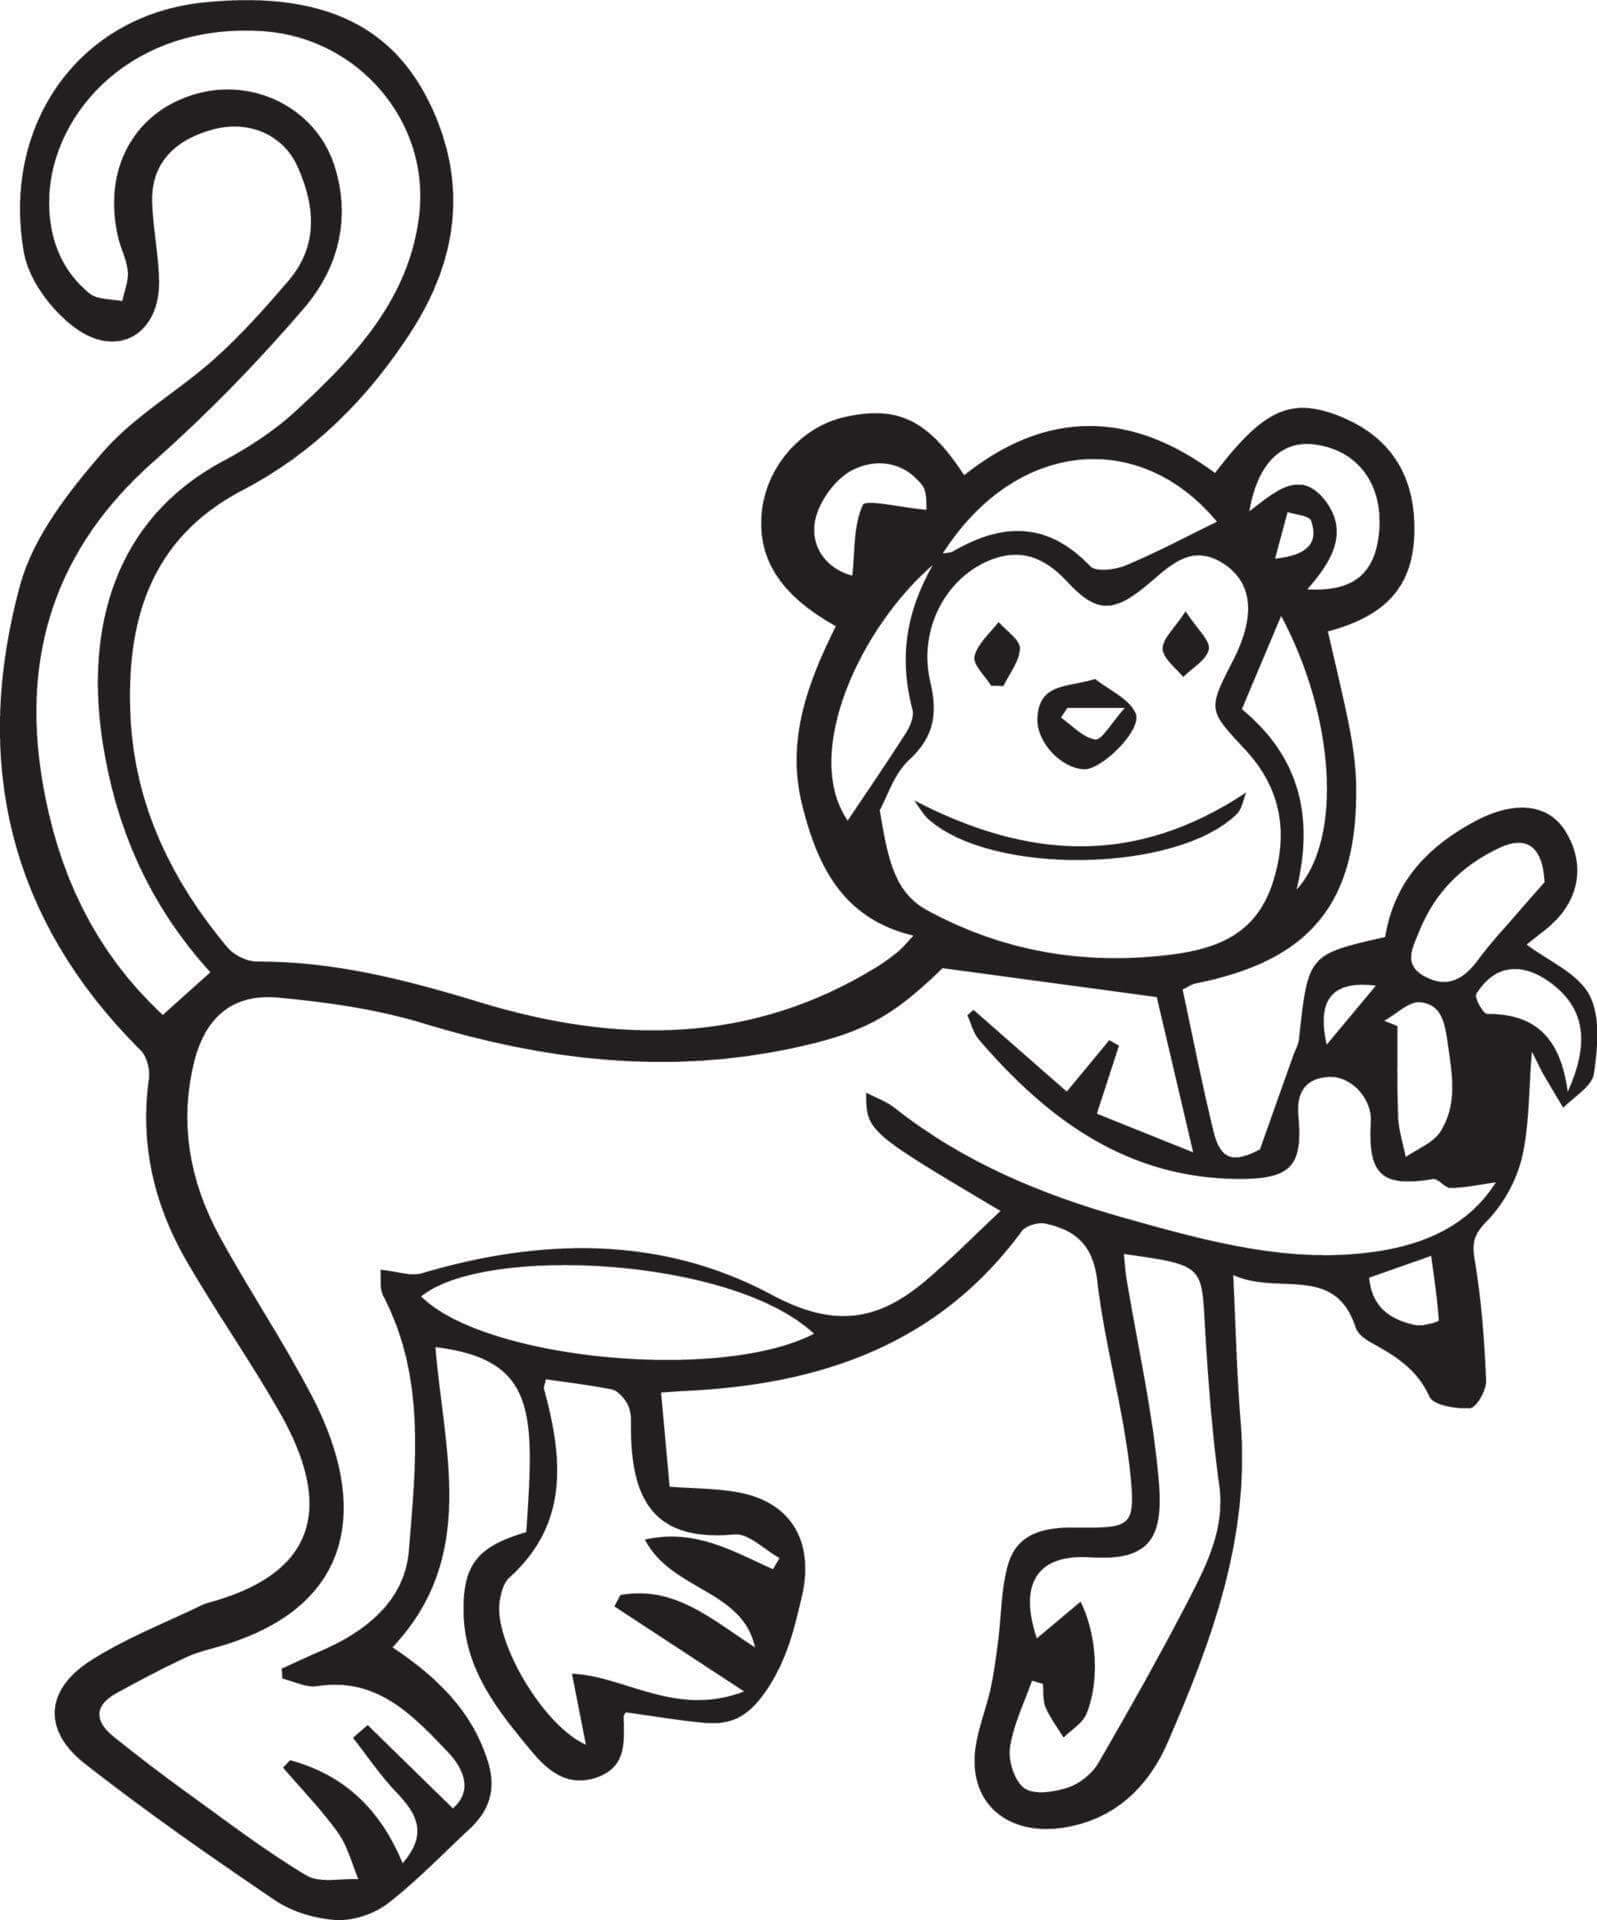 Macaco de Desenho Básico para colorir